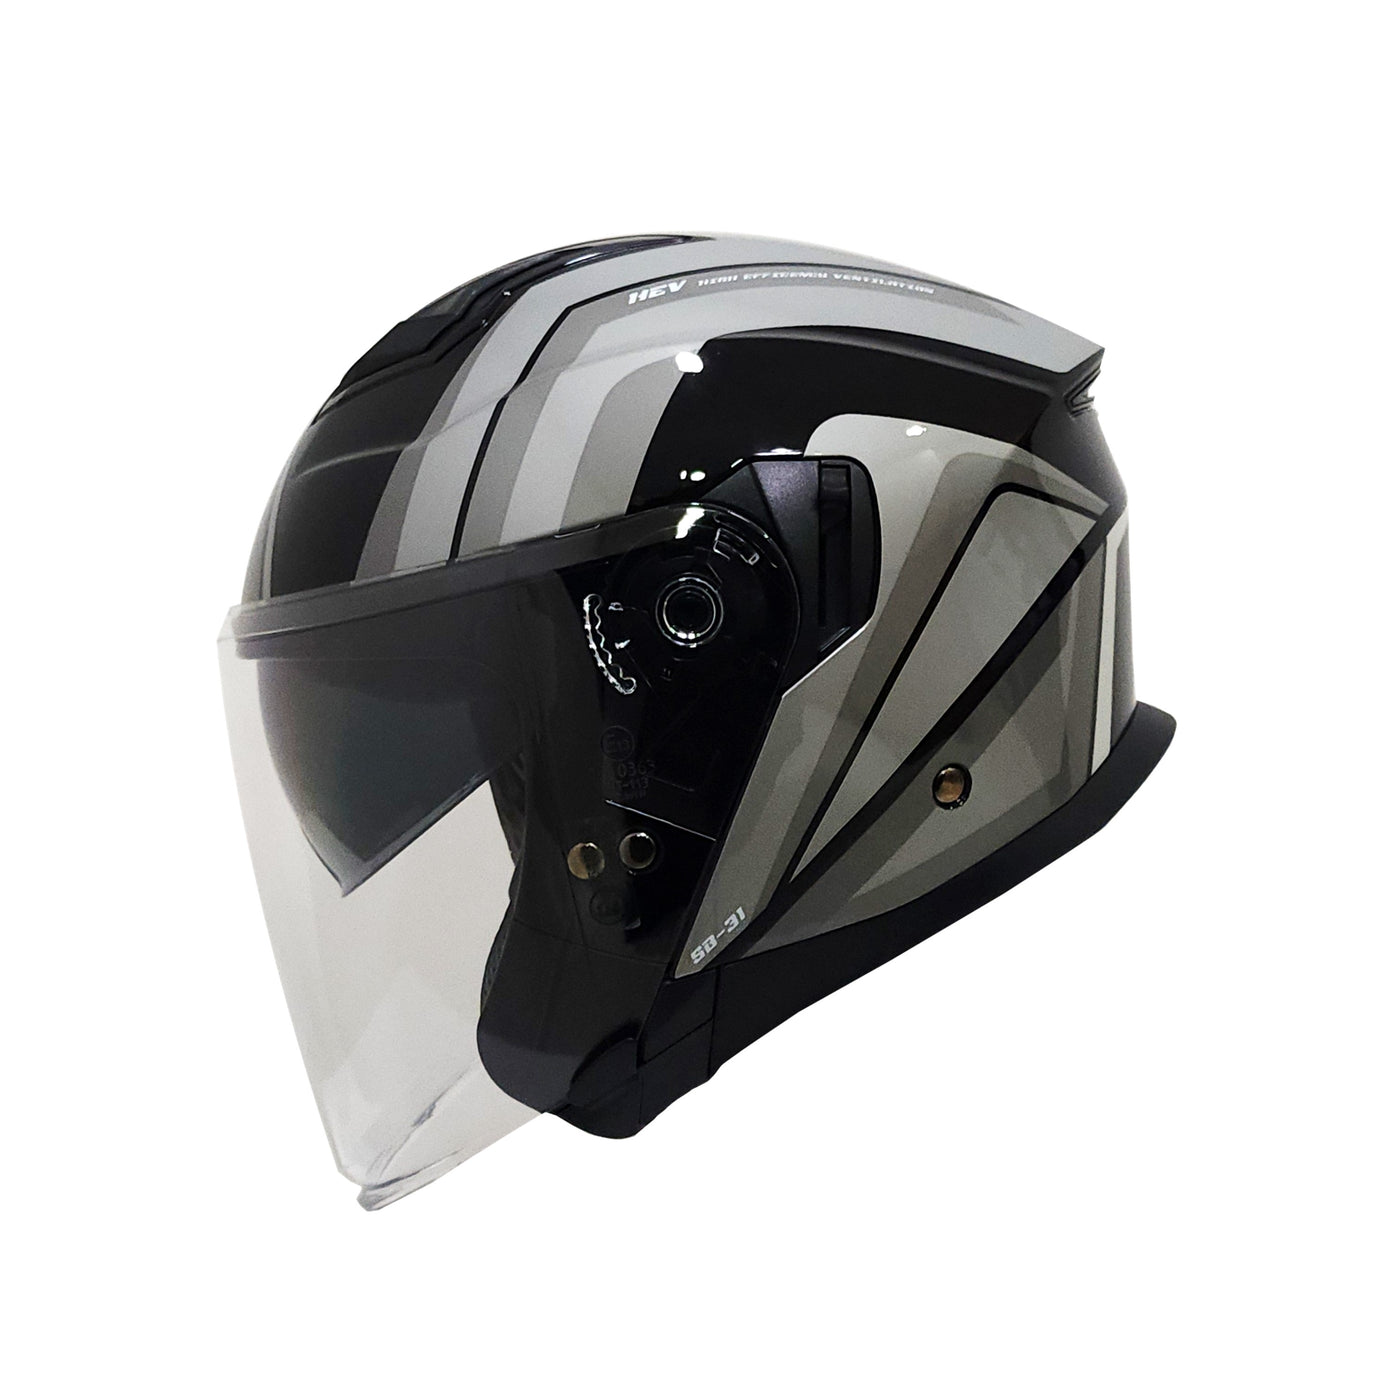 5M Boltz Graphic 1 Grey Helmet